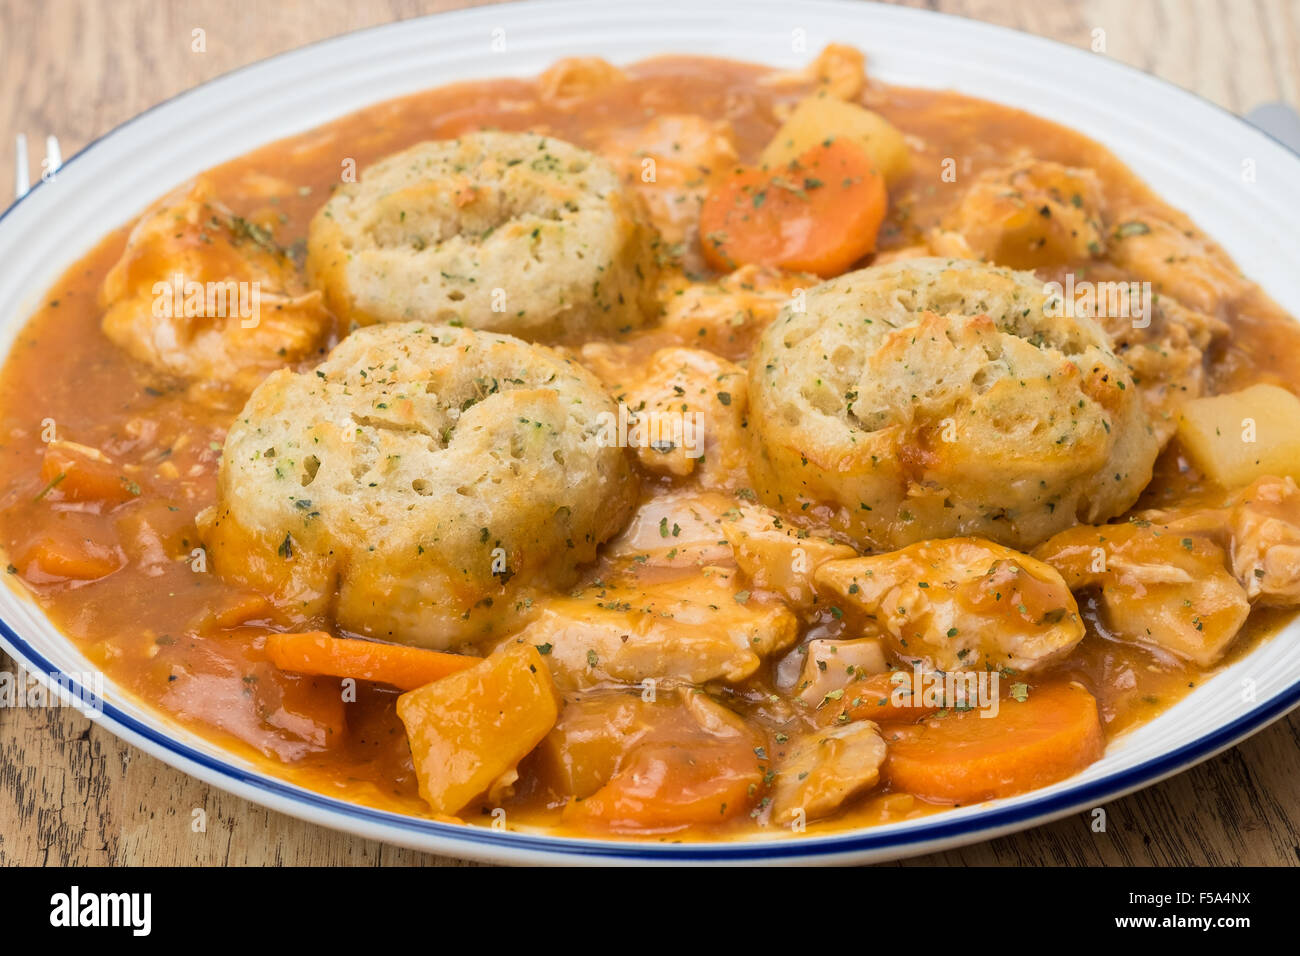 Chicken casserole and dumplings dinner - studio shot Stock Photo